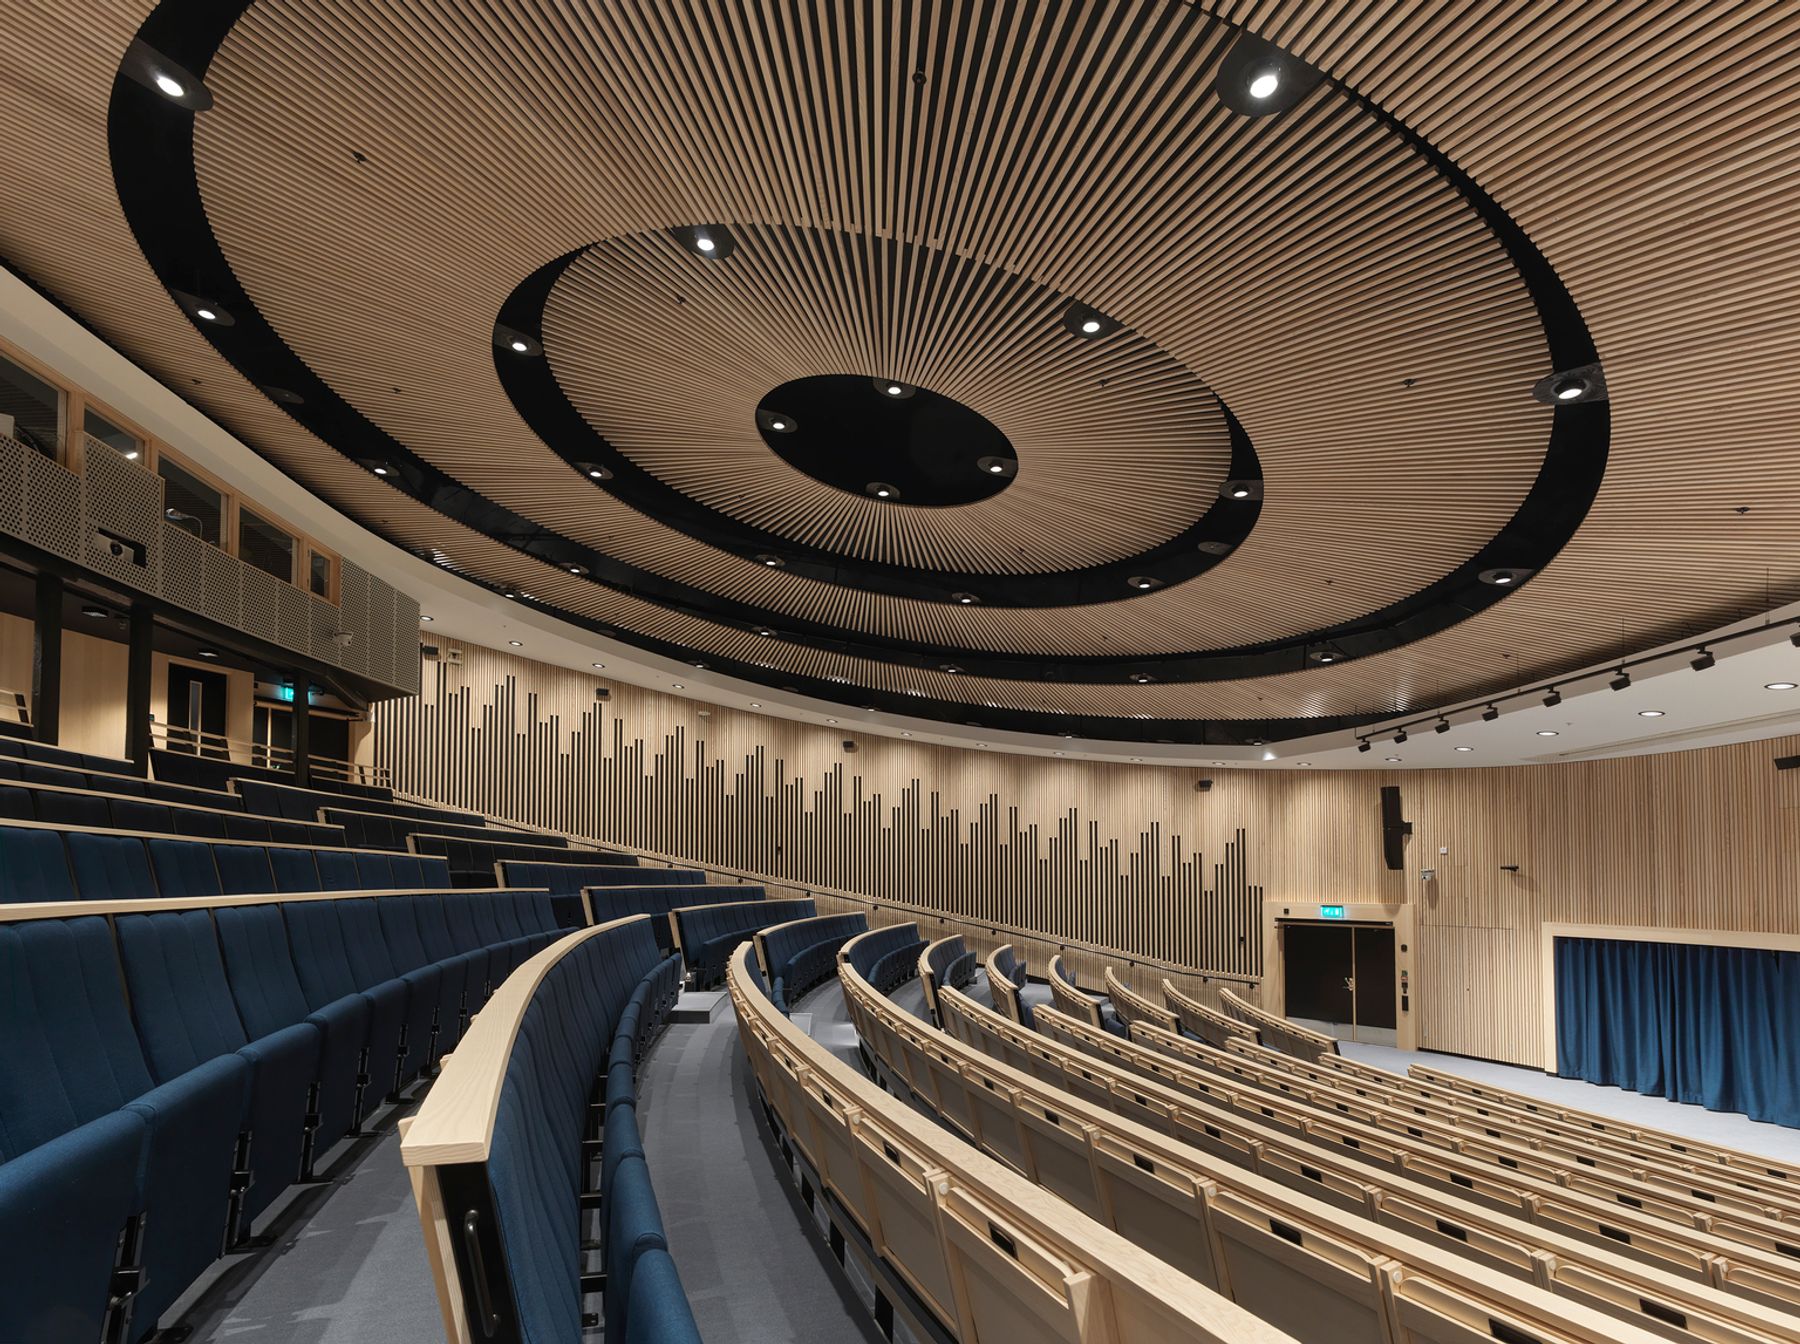 Auditorium, Lund. Architettura: ZOOM Arkitekter i Lund. Progettazione illuminotecnica: Stefan Malm, Sweco, Malmö. Fotografia: Erik Wik, Kyrkotorp.